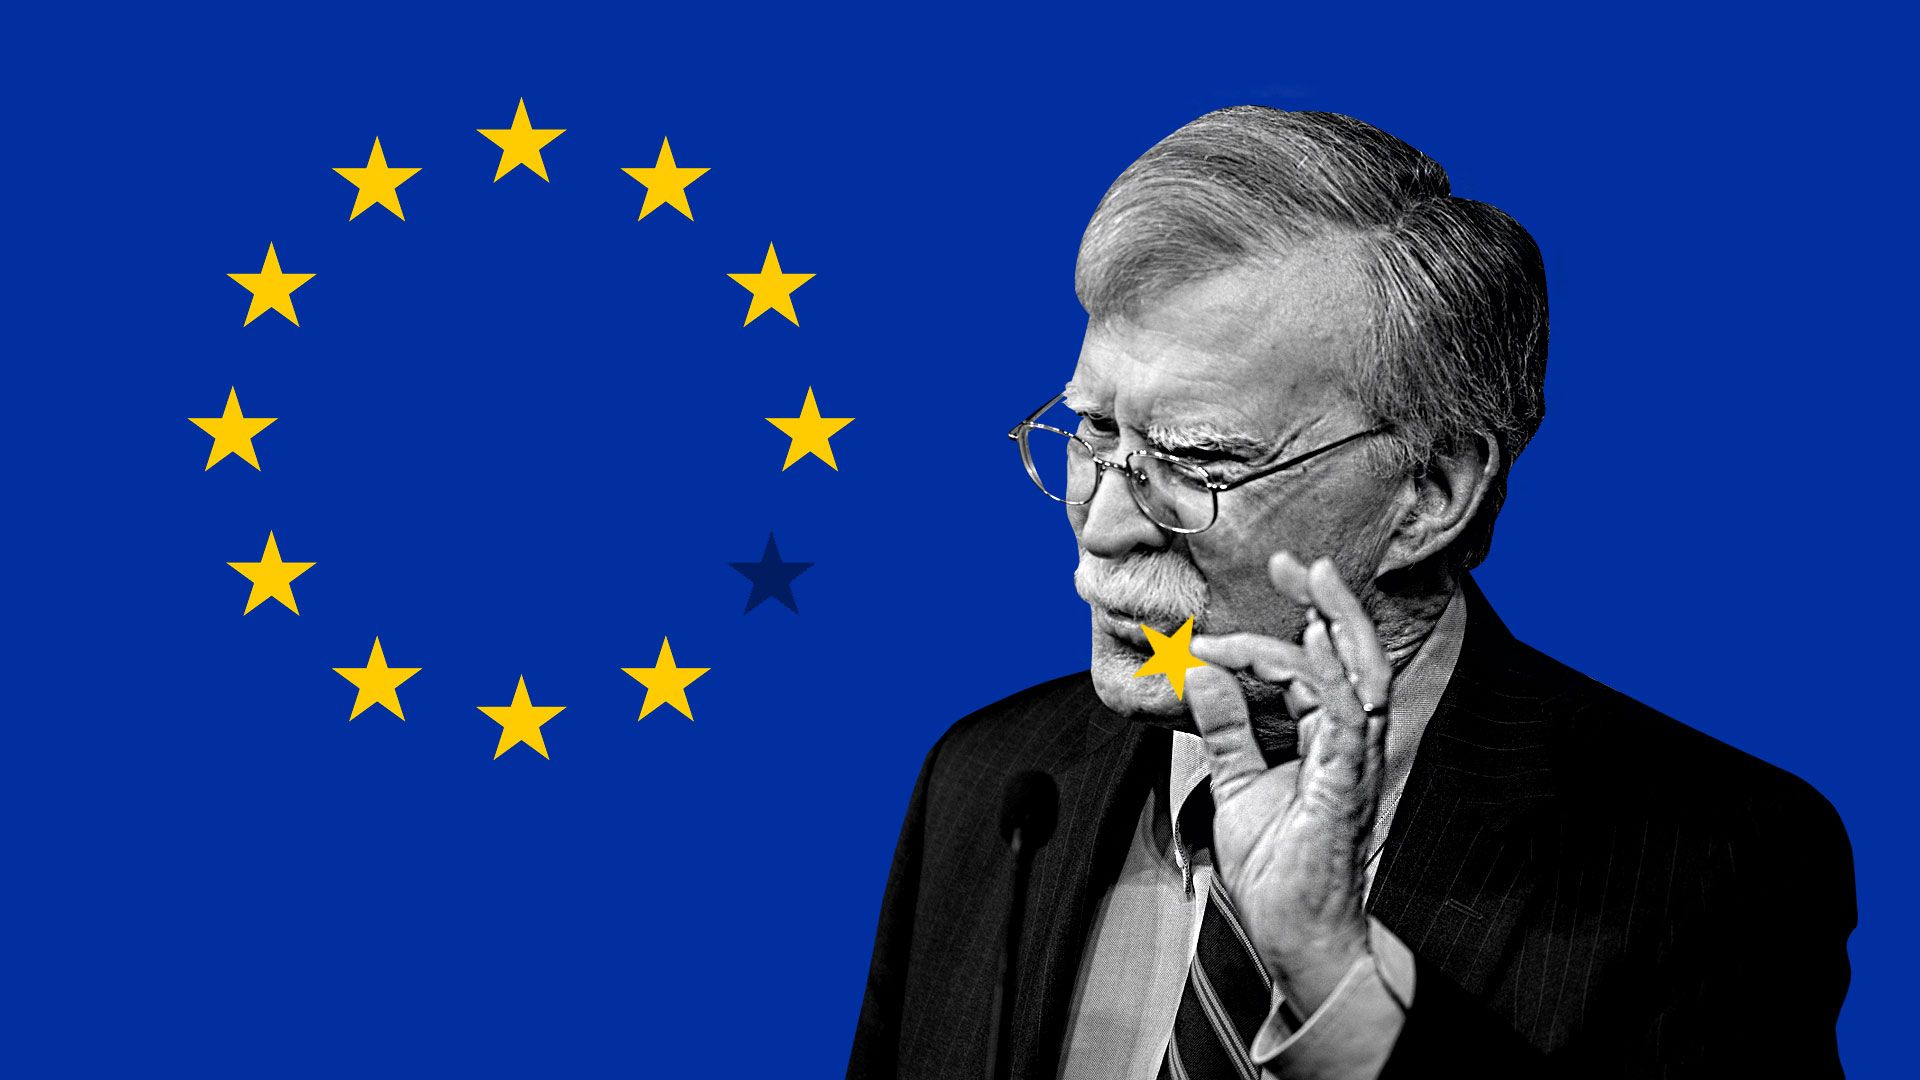 John Bolton removes a star from the EU flag